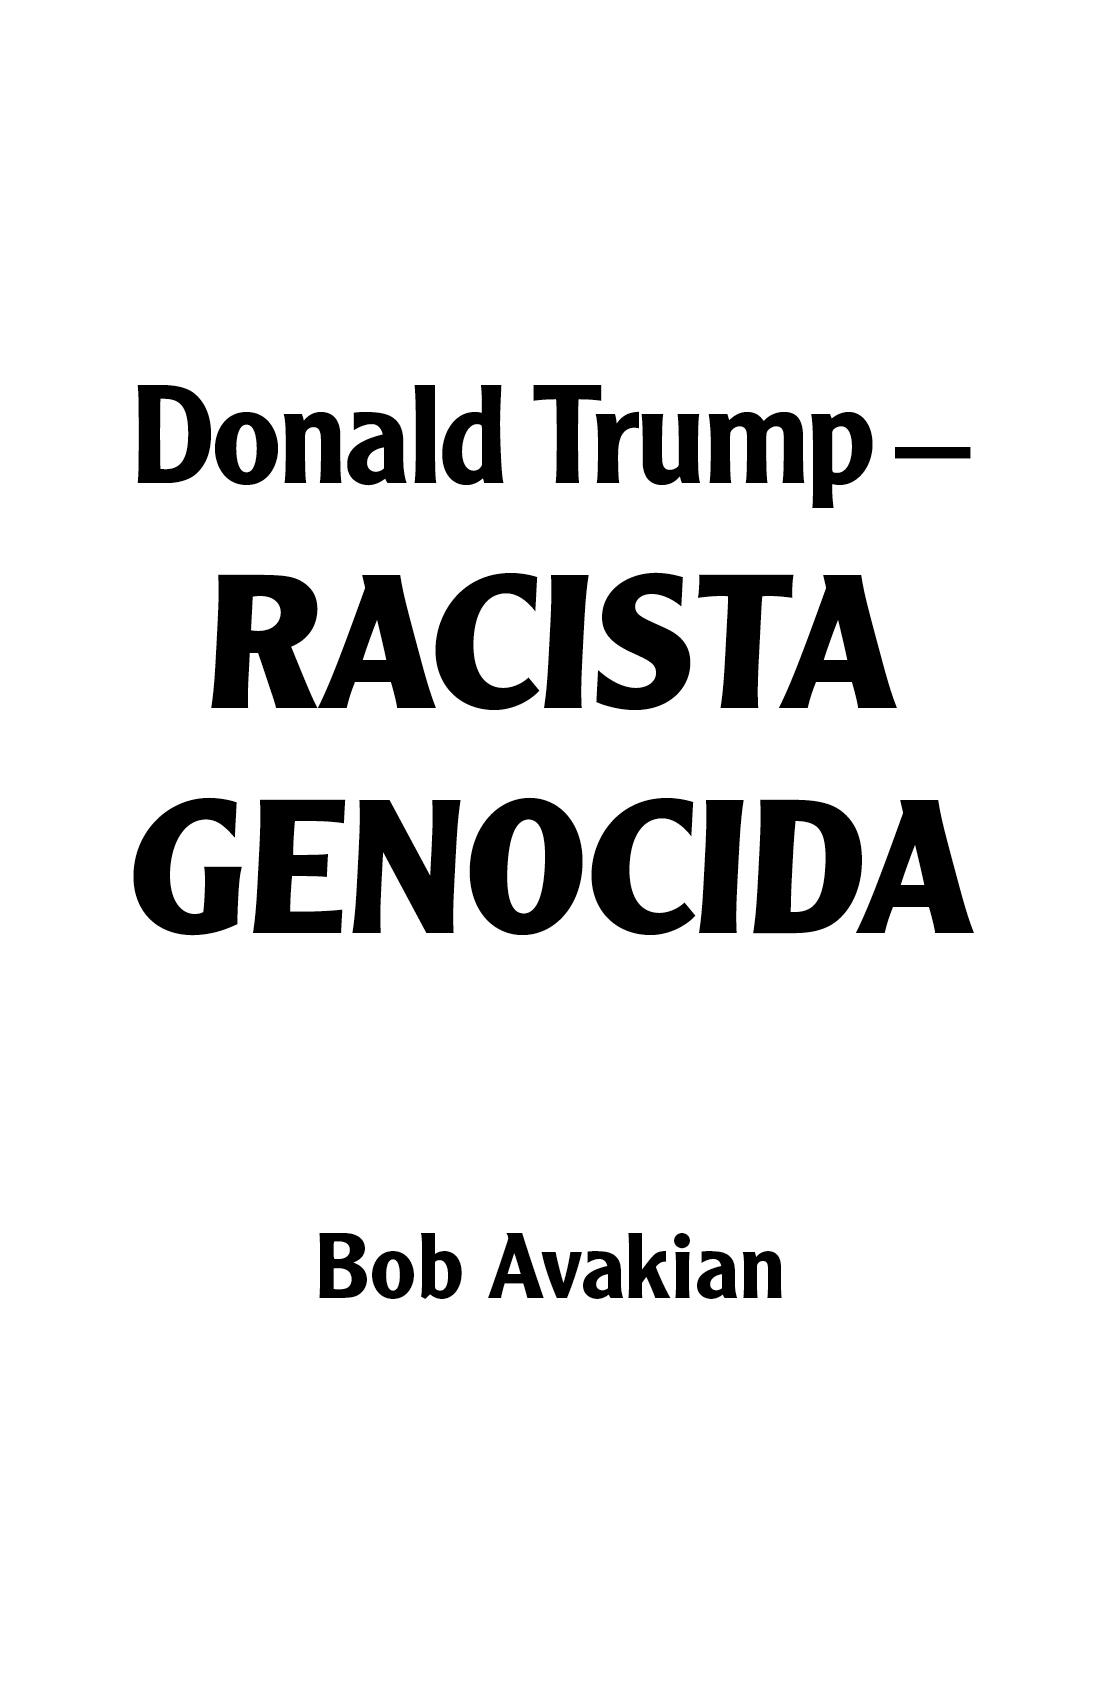 Donald Trump - Genocidal Racist